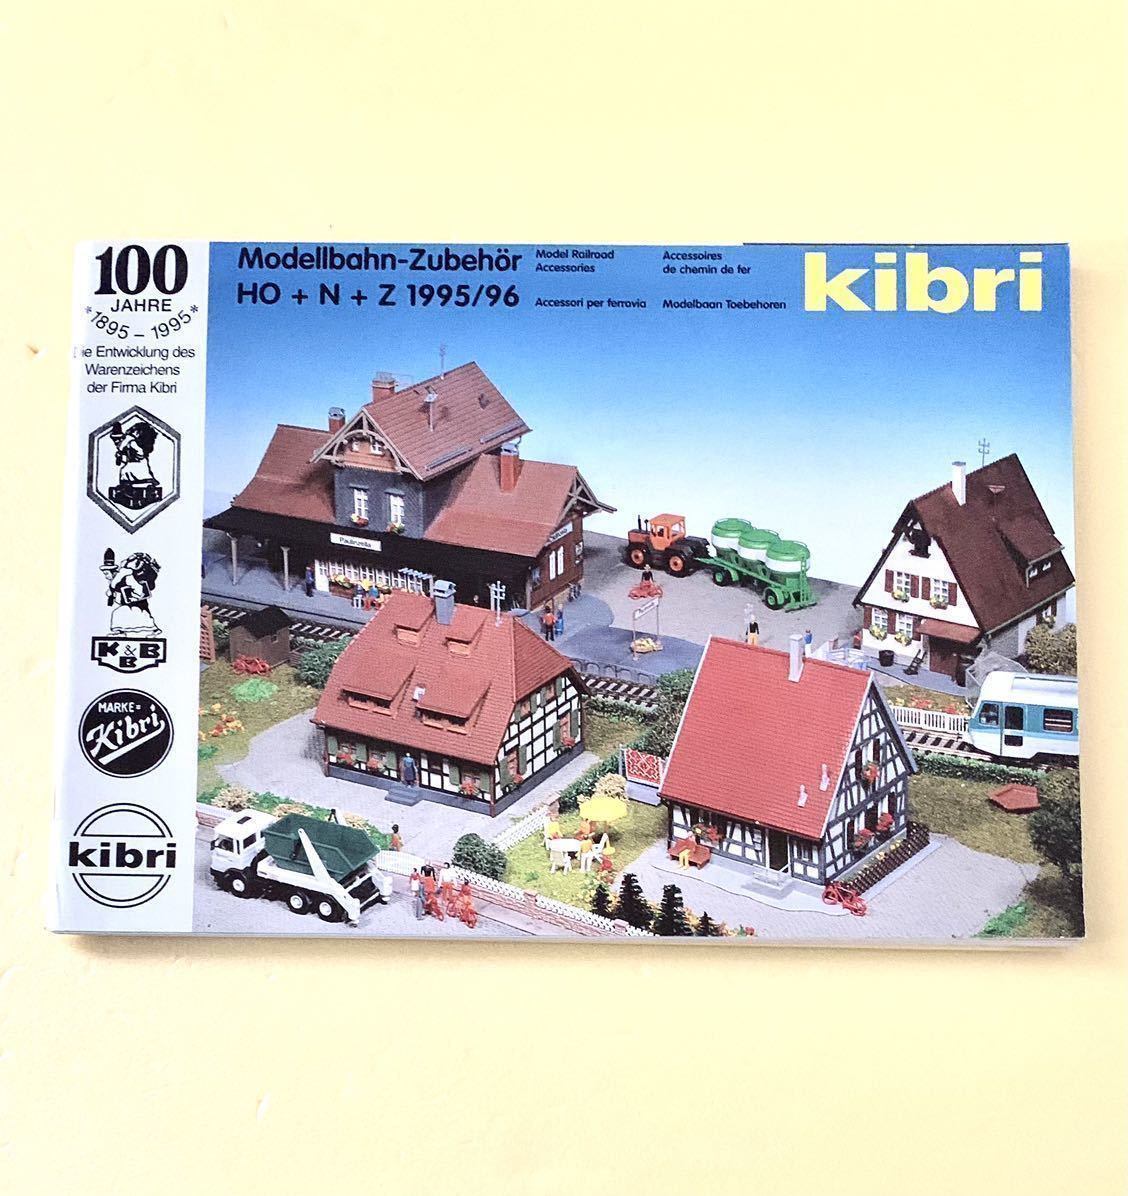 Kibri　キブリ　カタログ　100周年　1995/96　ストラクチャー　HO　N　Z　ゲージ　ジオラマ　鉄道模型　洋書_画像1